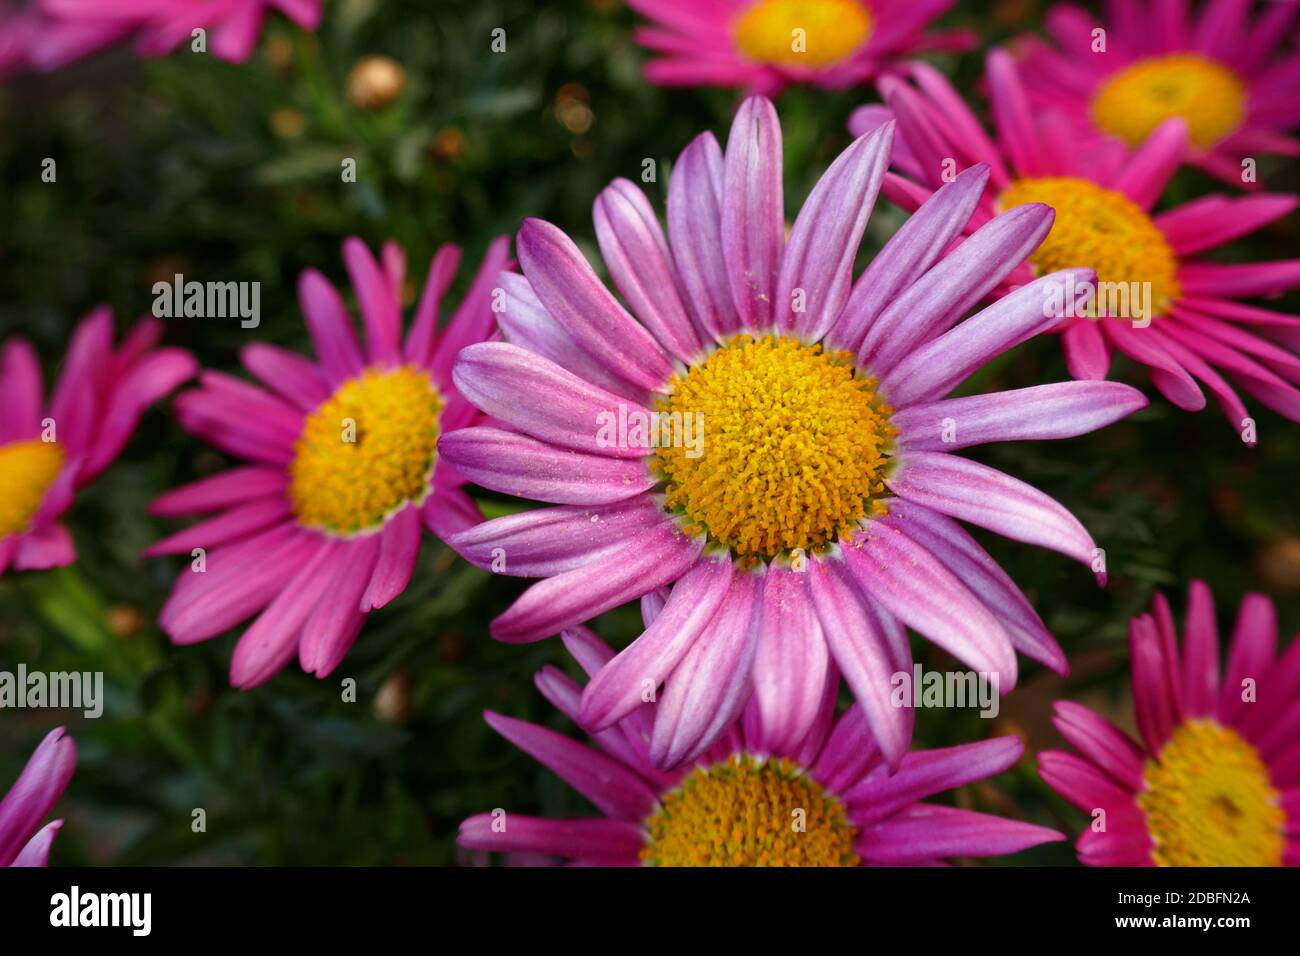 pink shrub daisies Stock Photo